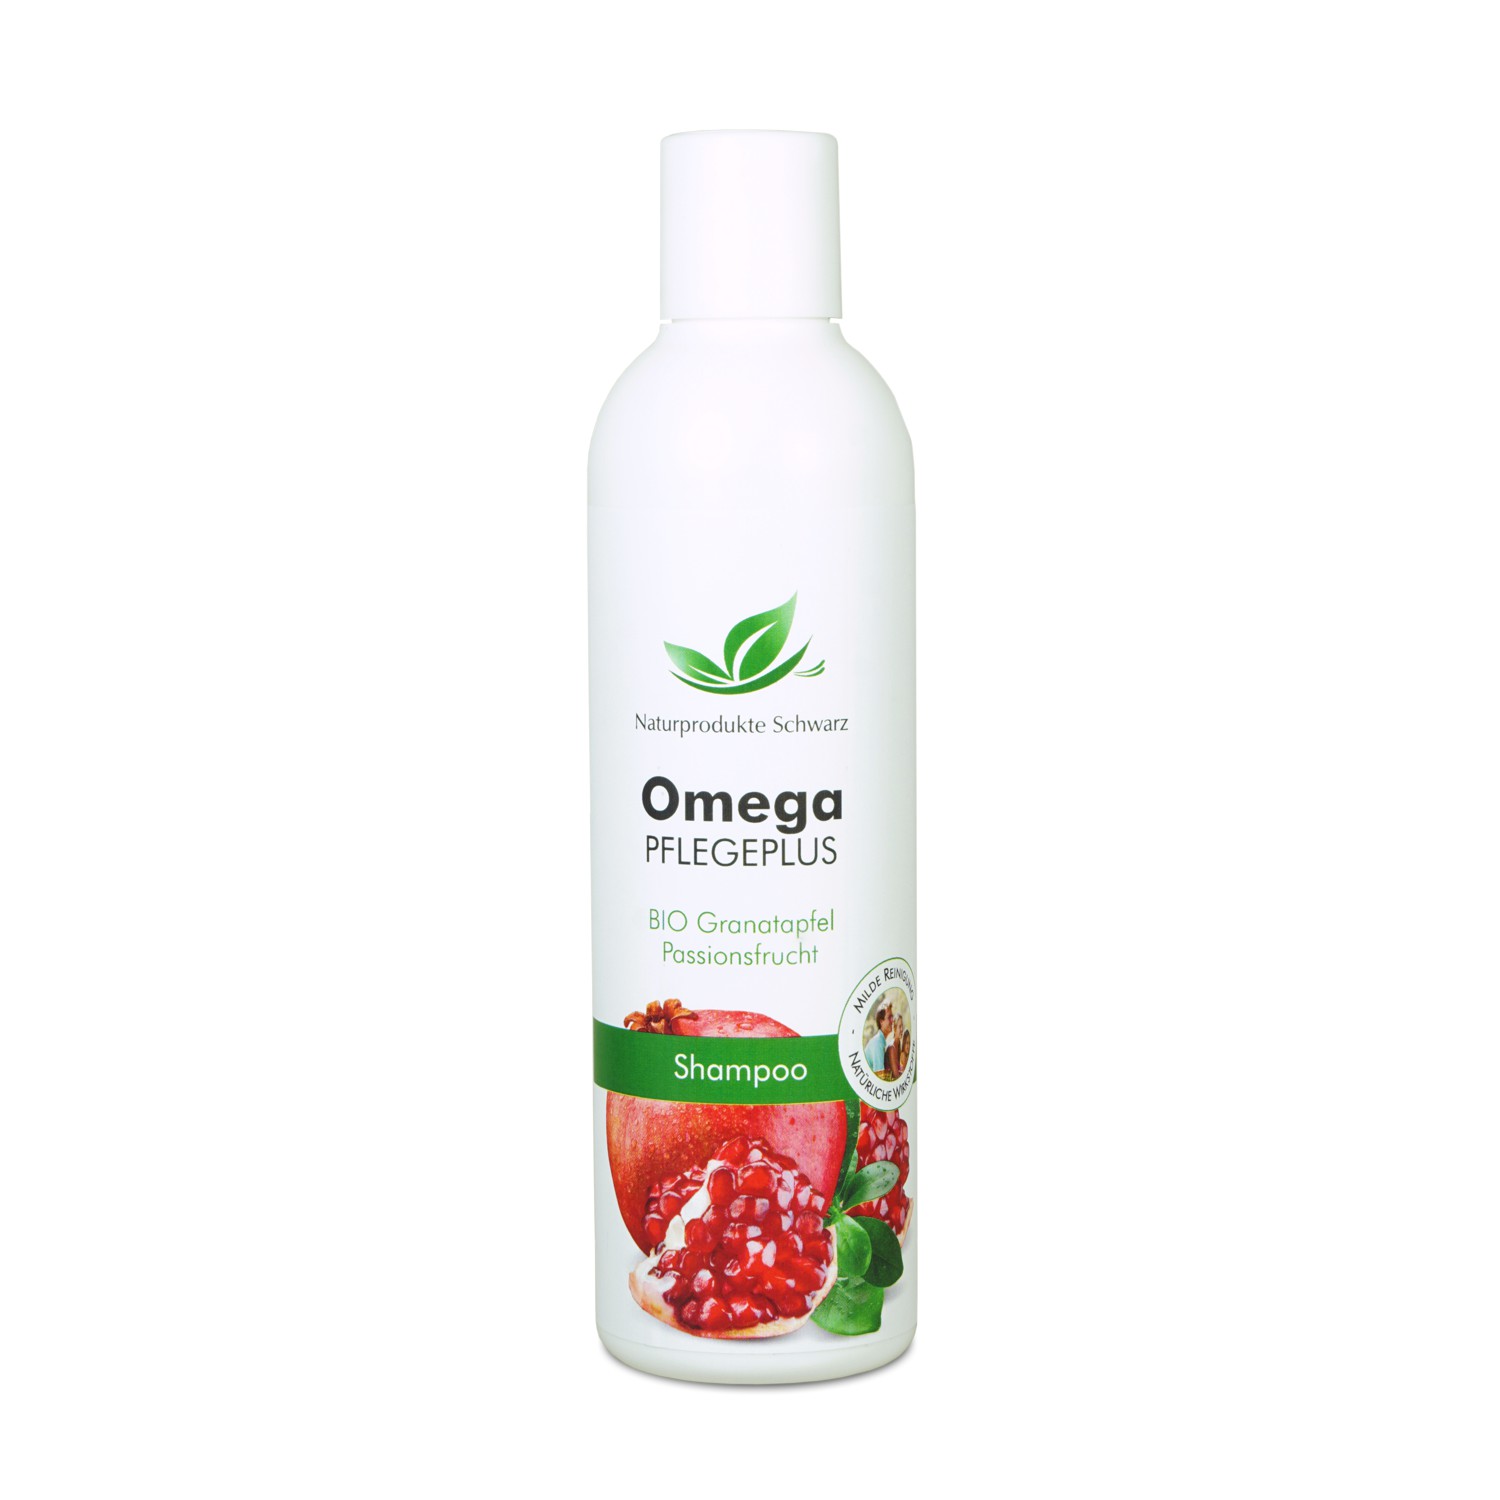 Omega Pflegeplus Shampoo Granatapfel - Für feines Haar - Ohne Silikone